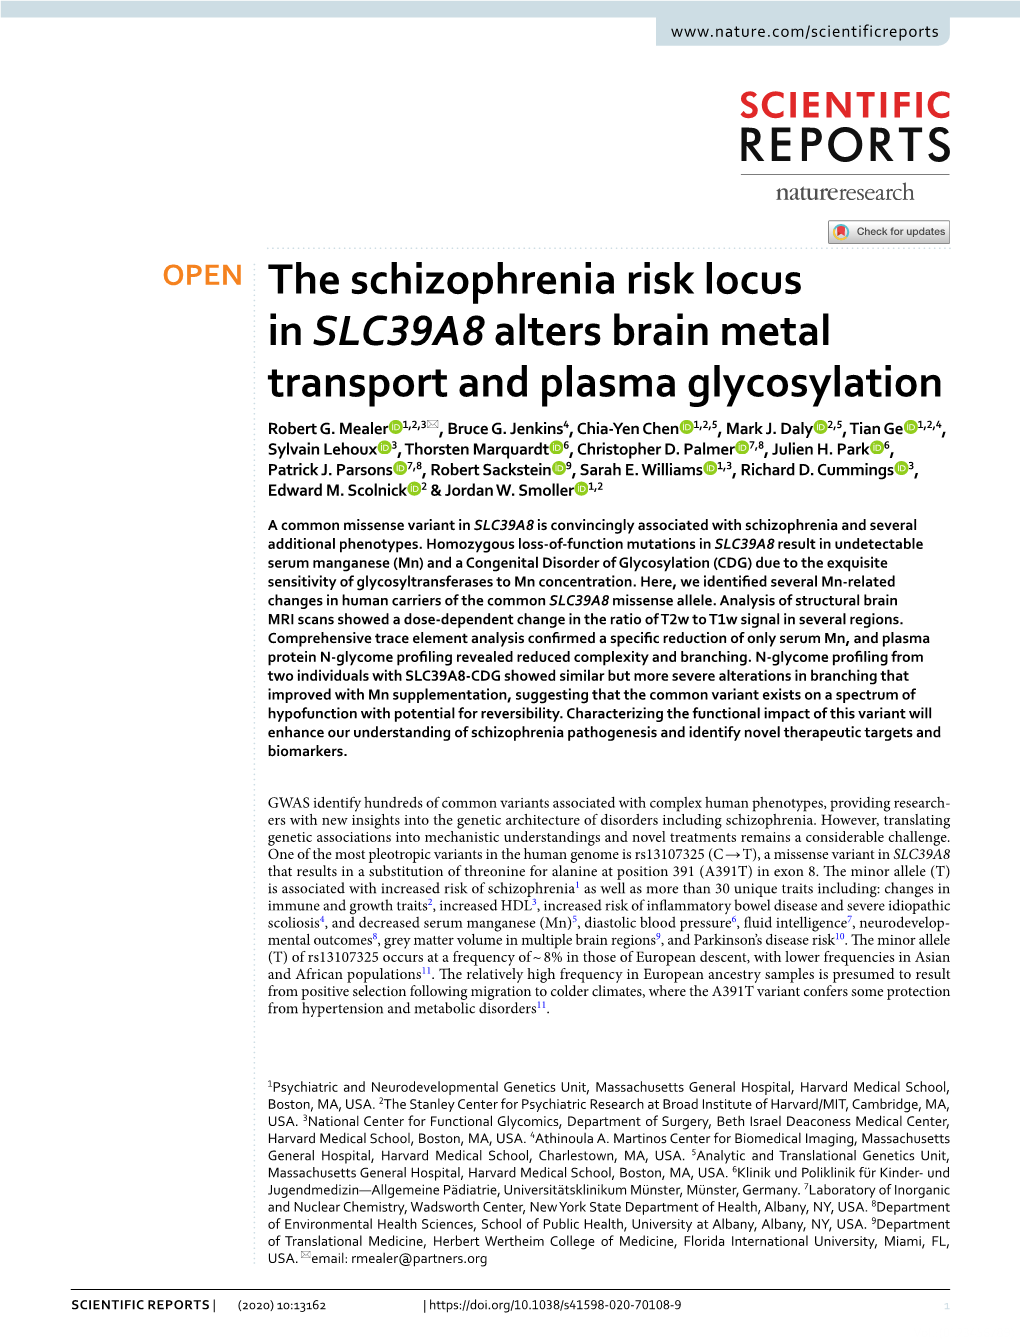 The Schizophrenia Risk Locus in SLC39A8 Alters Brain Metal Transport and Plasma Glycosylation Robert G